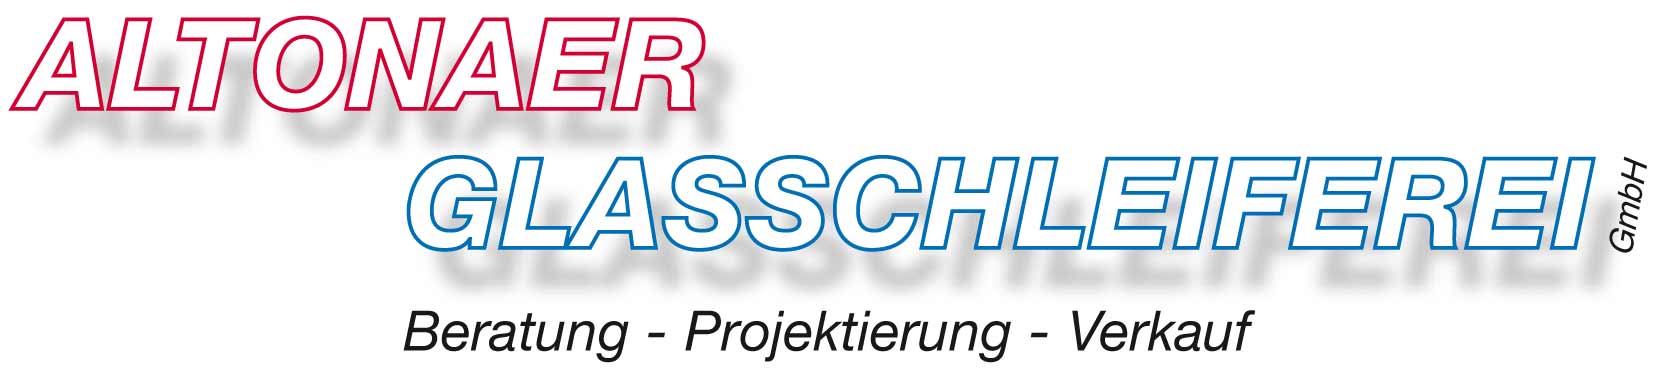 Altonaer Glasschleiferei Pöppe & Möller GmbH